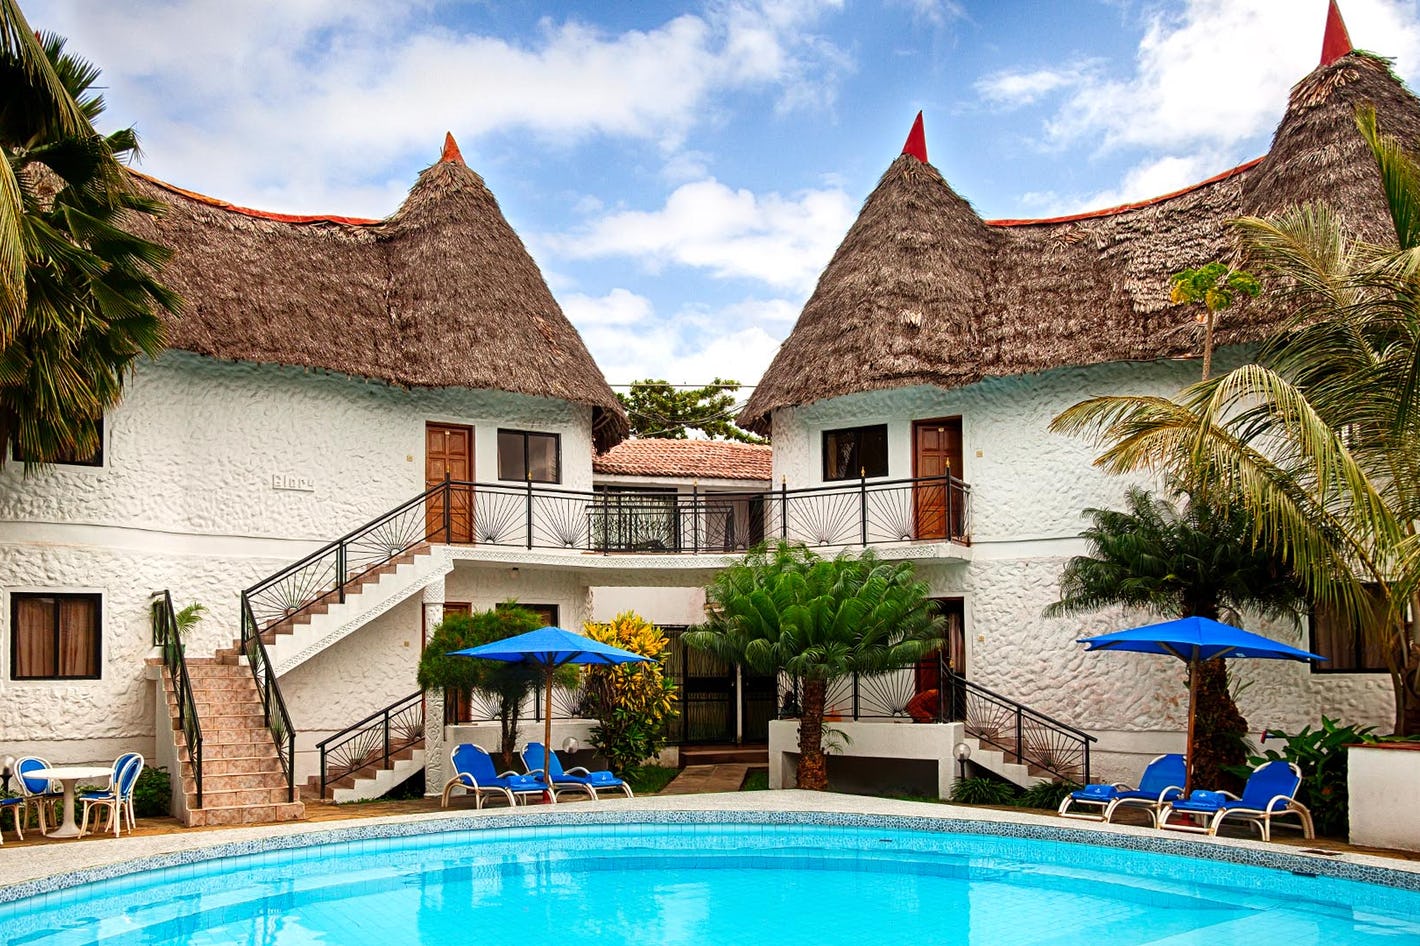 PrideInn Nyali best budget hotels in Mombasa